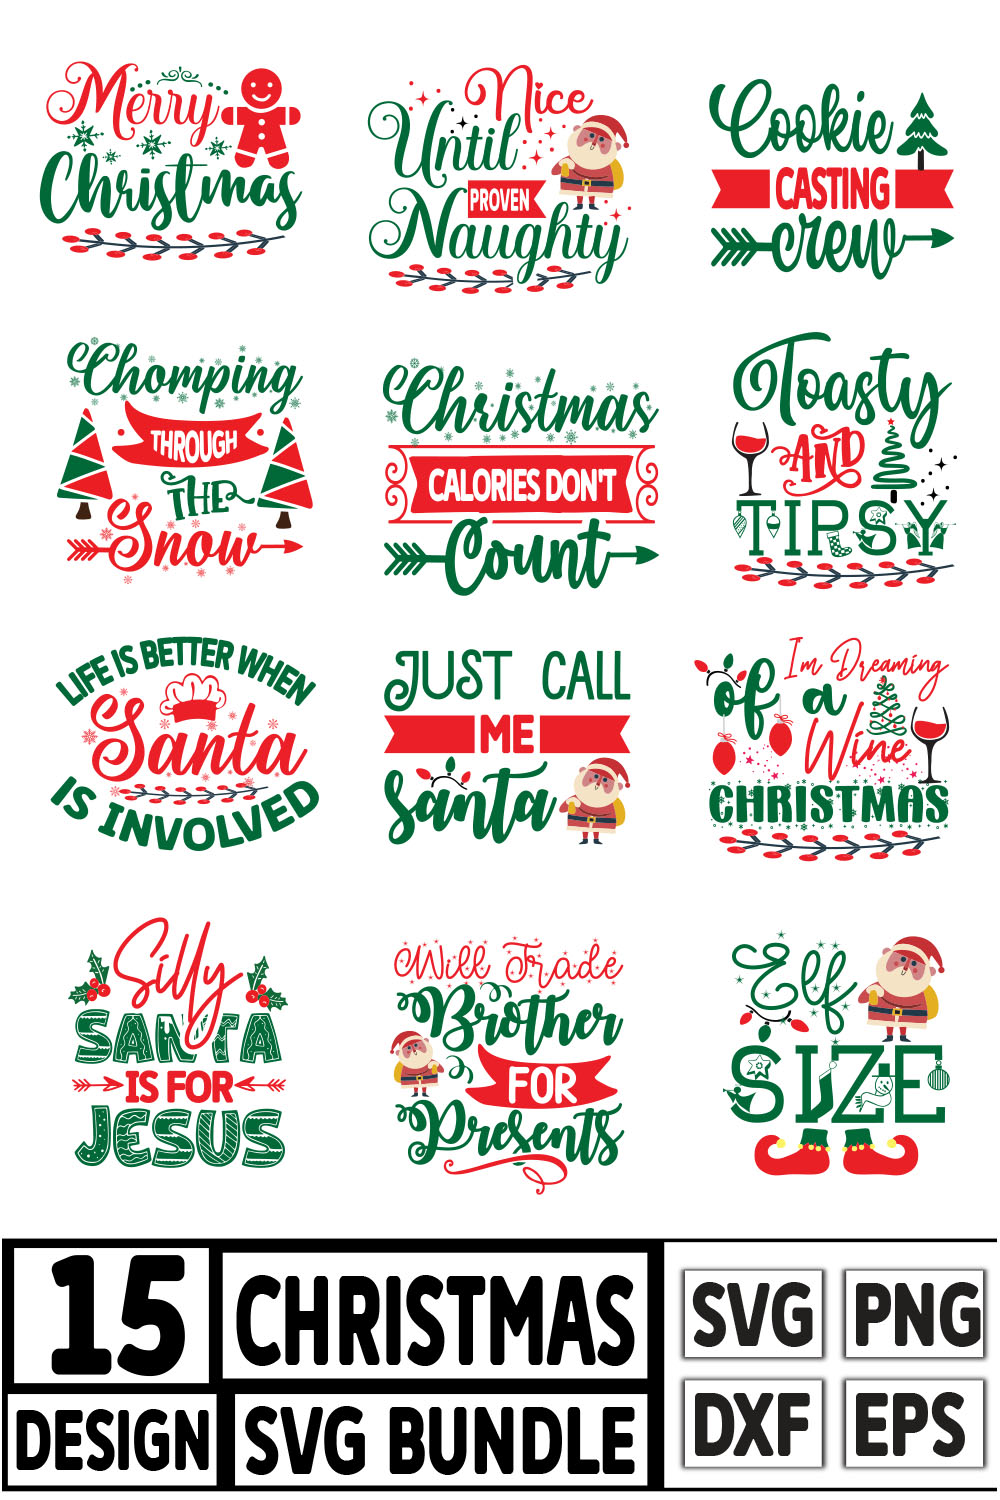 Christmas SVG Bundle - pinterest image preview.